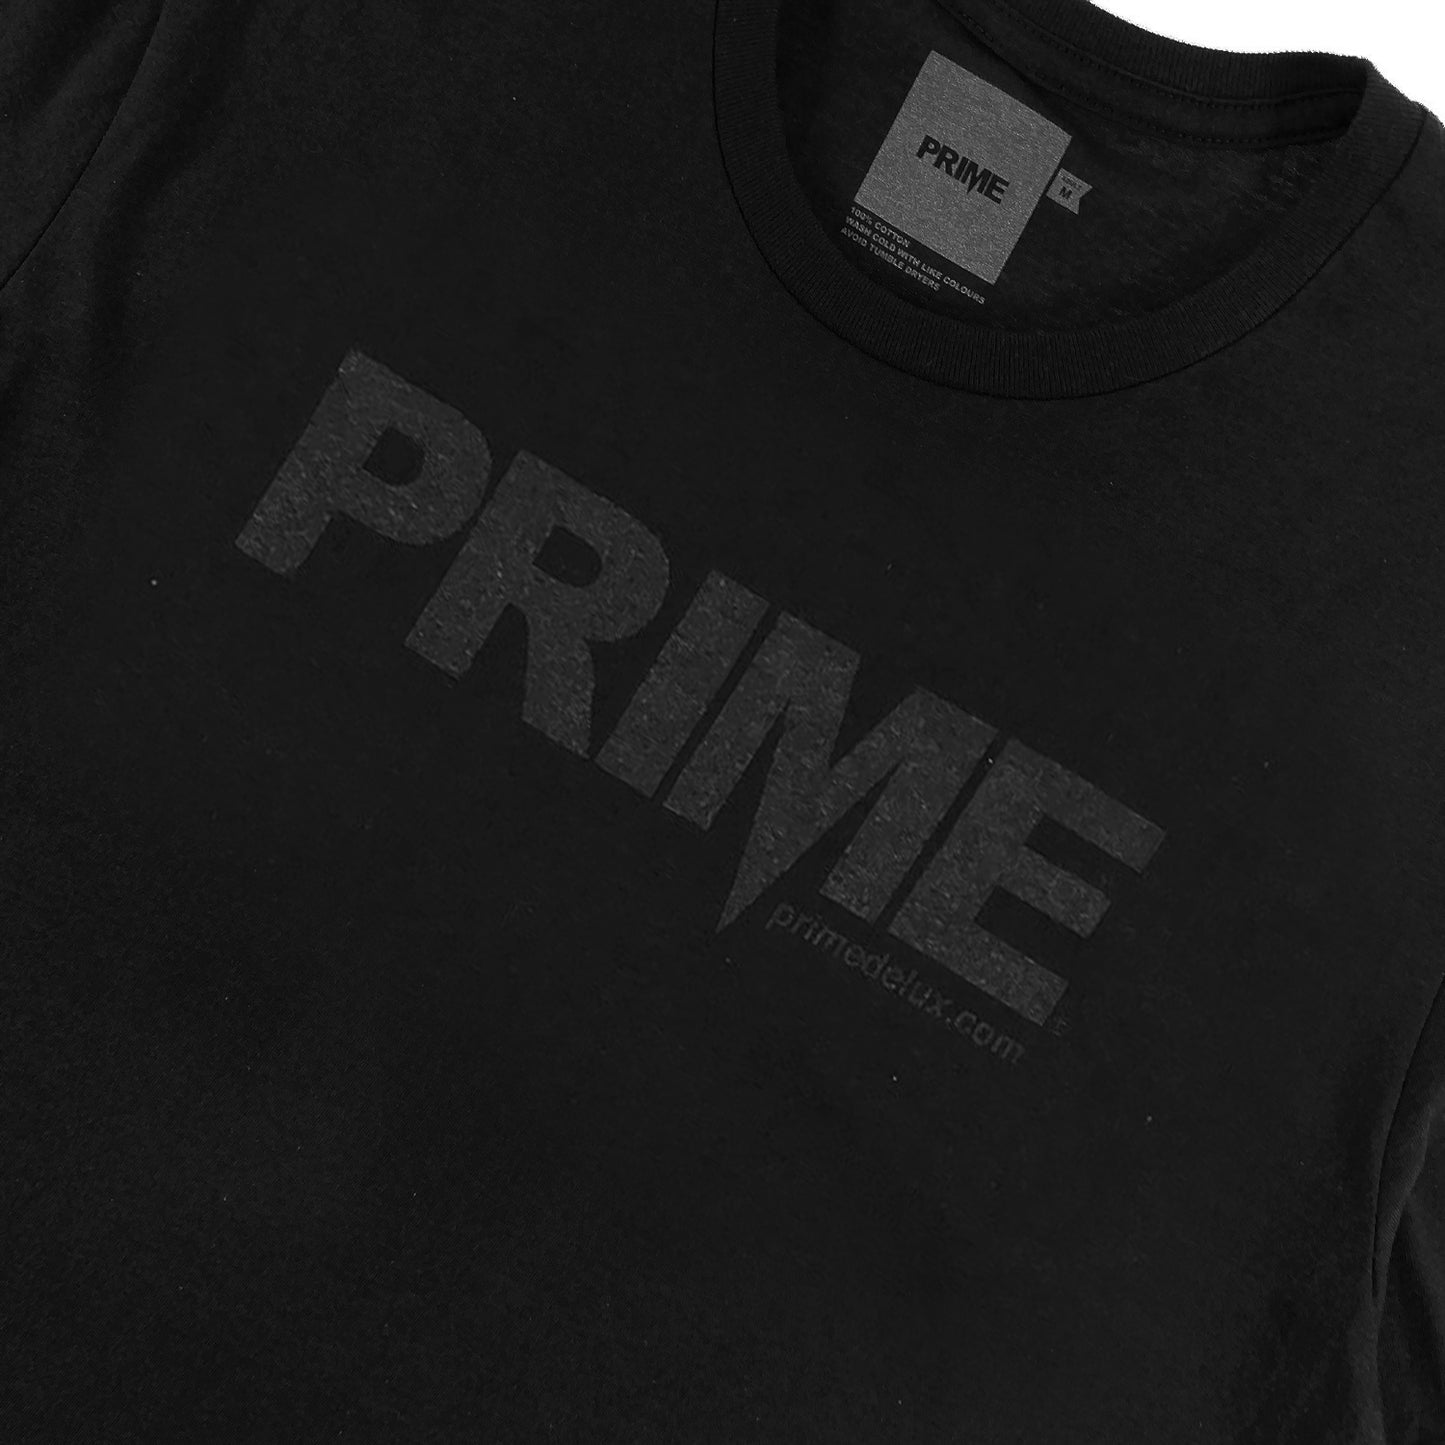 PRIME DELUX OG PREMIUM SHORT SLEEVE T-SHIRT - BLACK / BLACK - Prime Delux Store